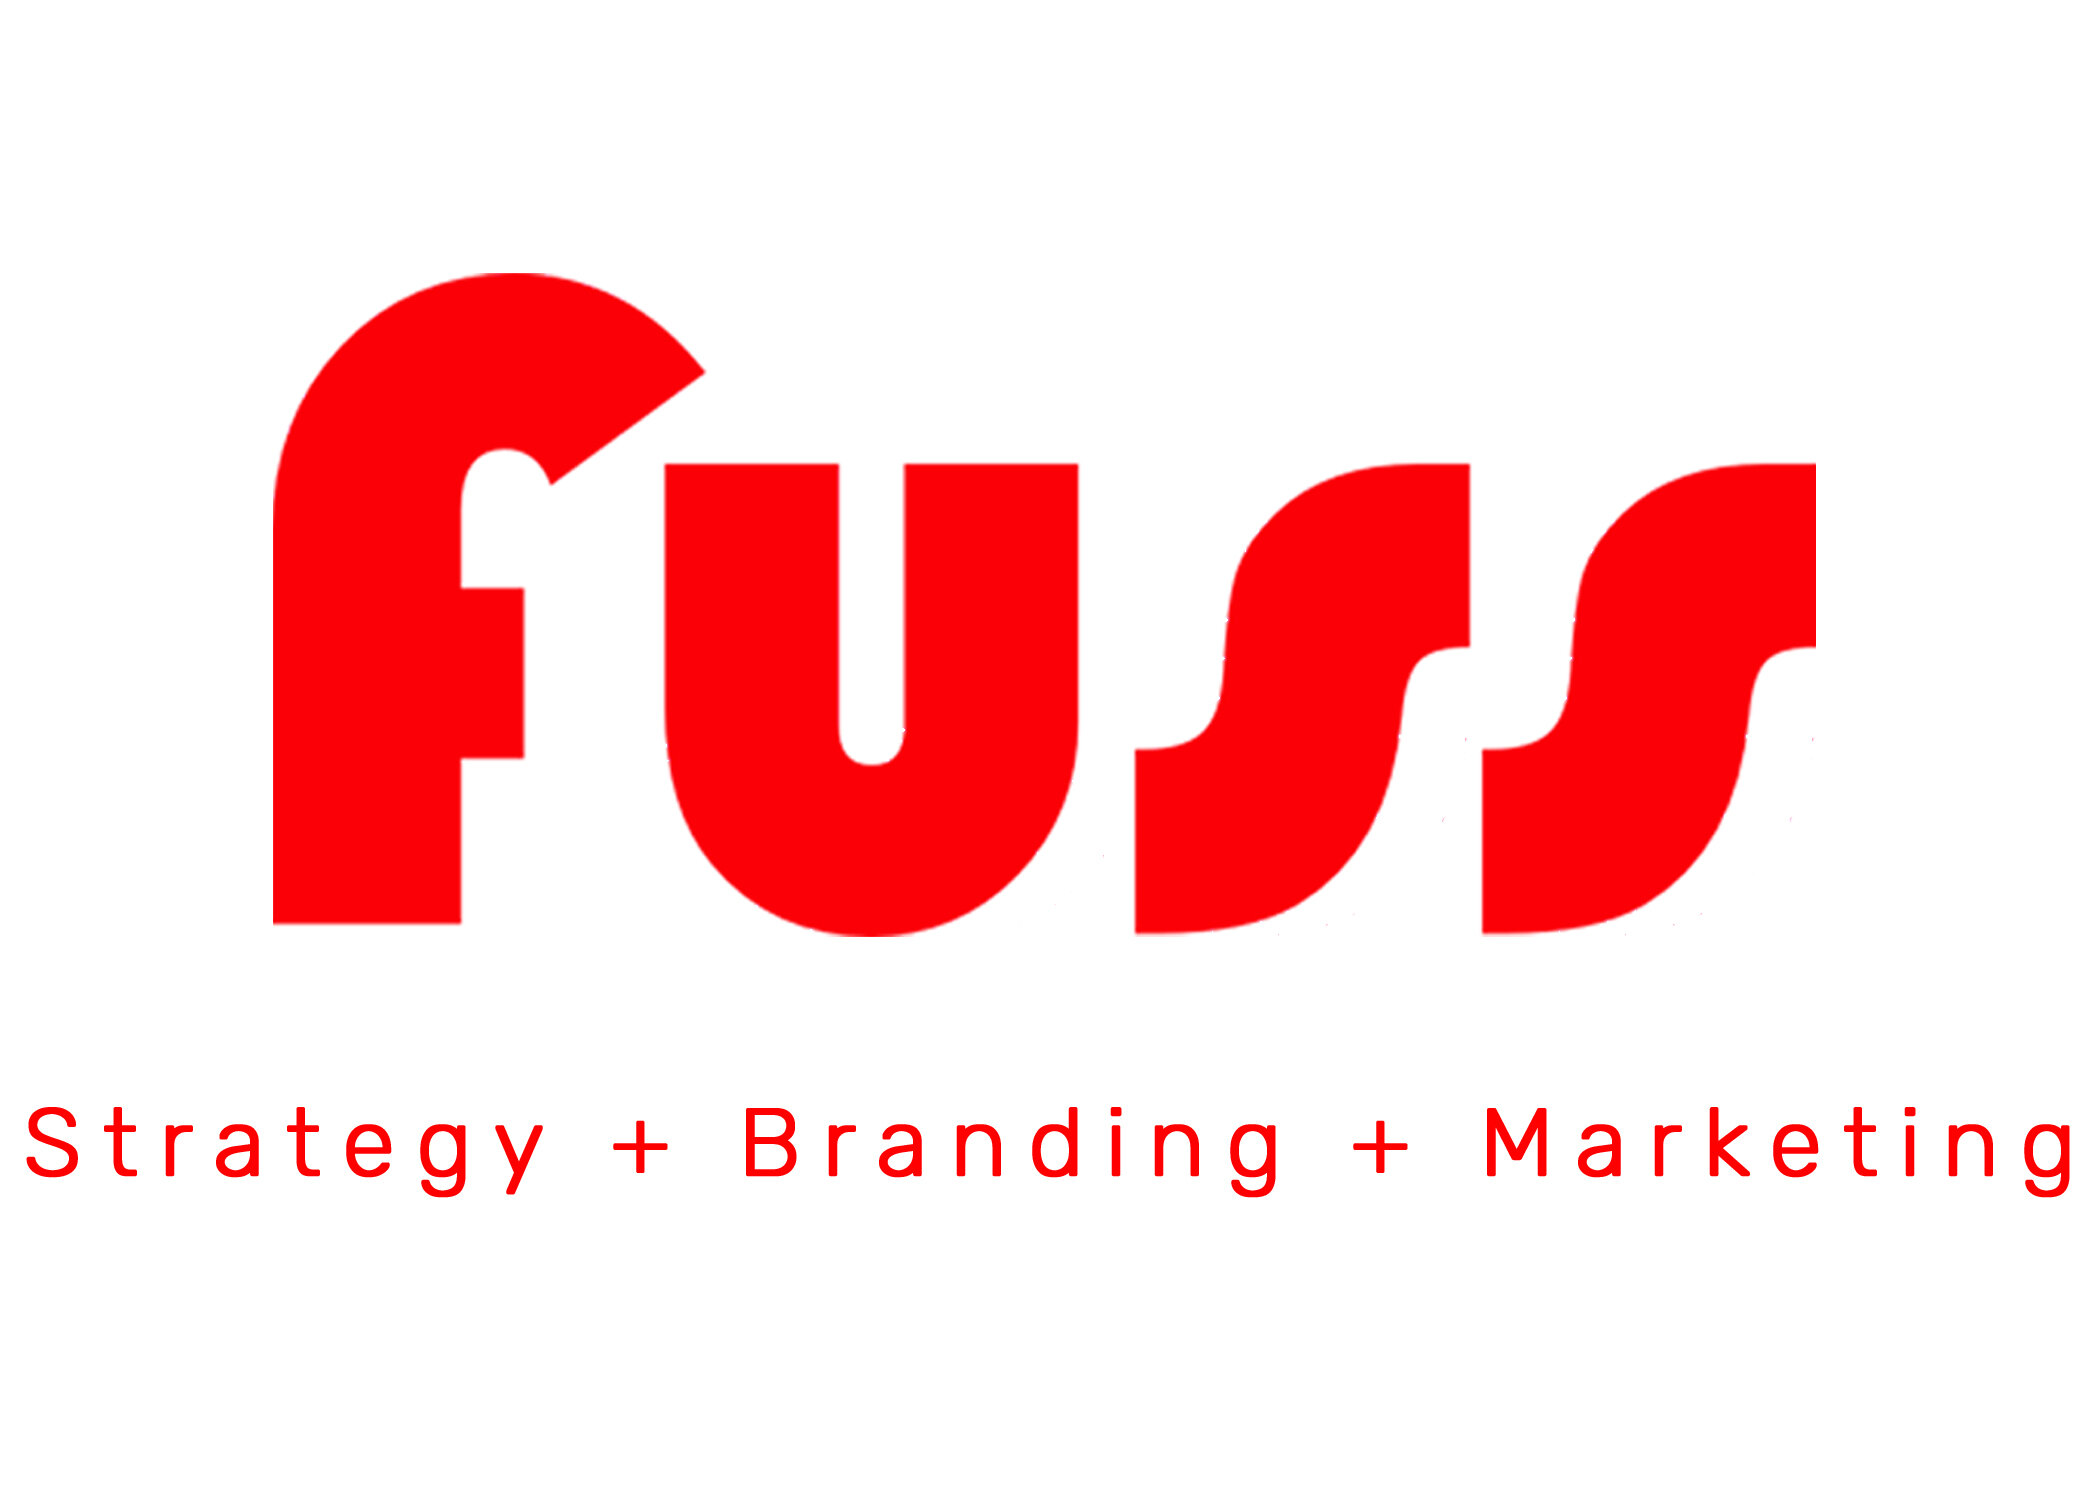 Fuss Marketing